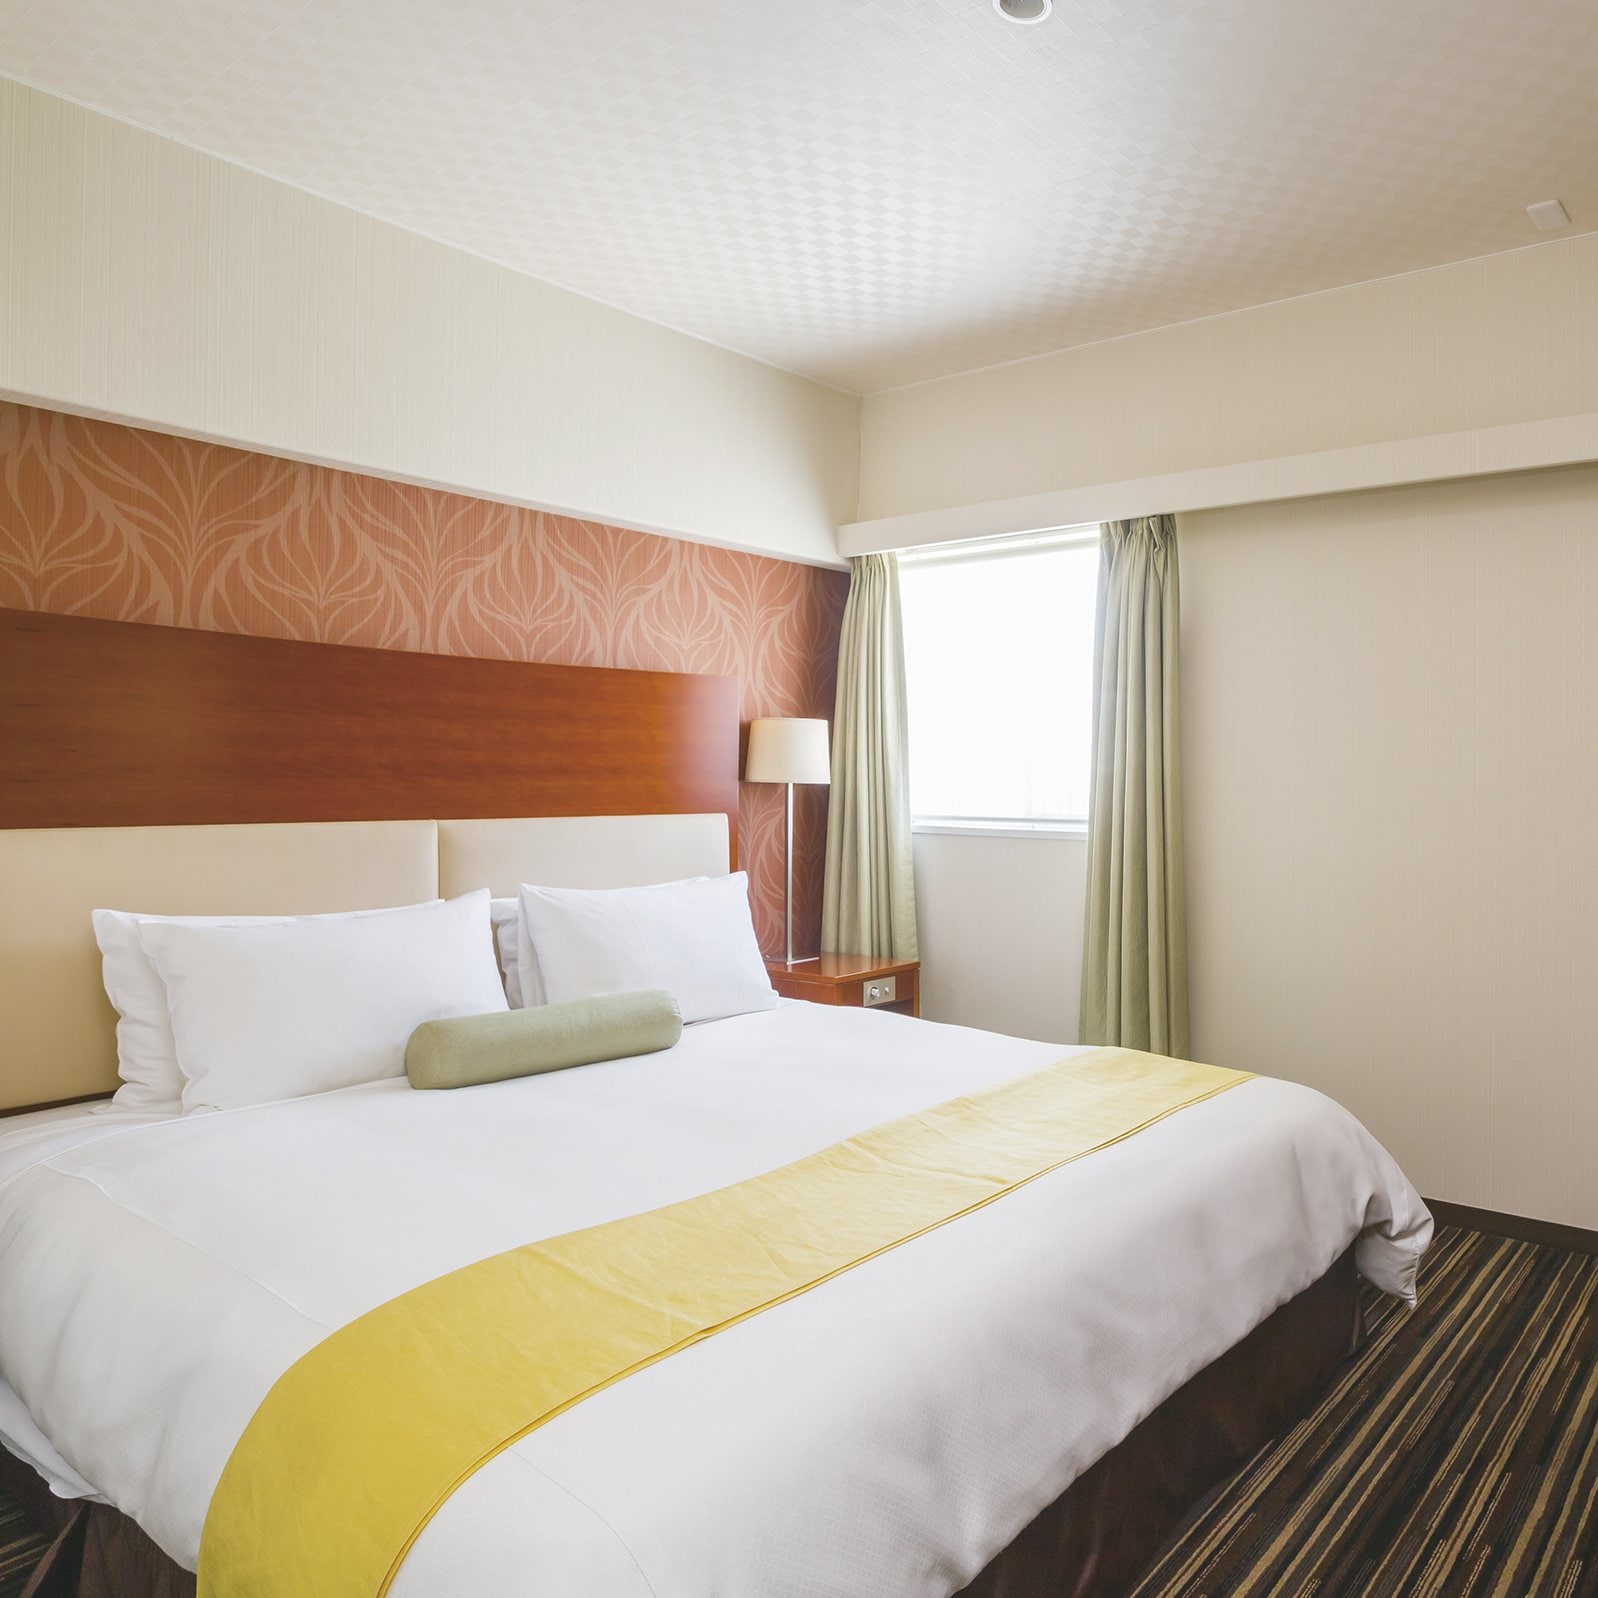 Moderate room ◆ Bed width 1600mm ◆ Simmons mattress